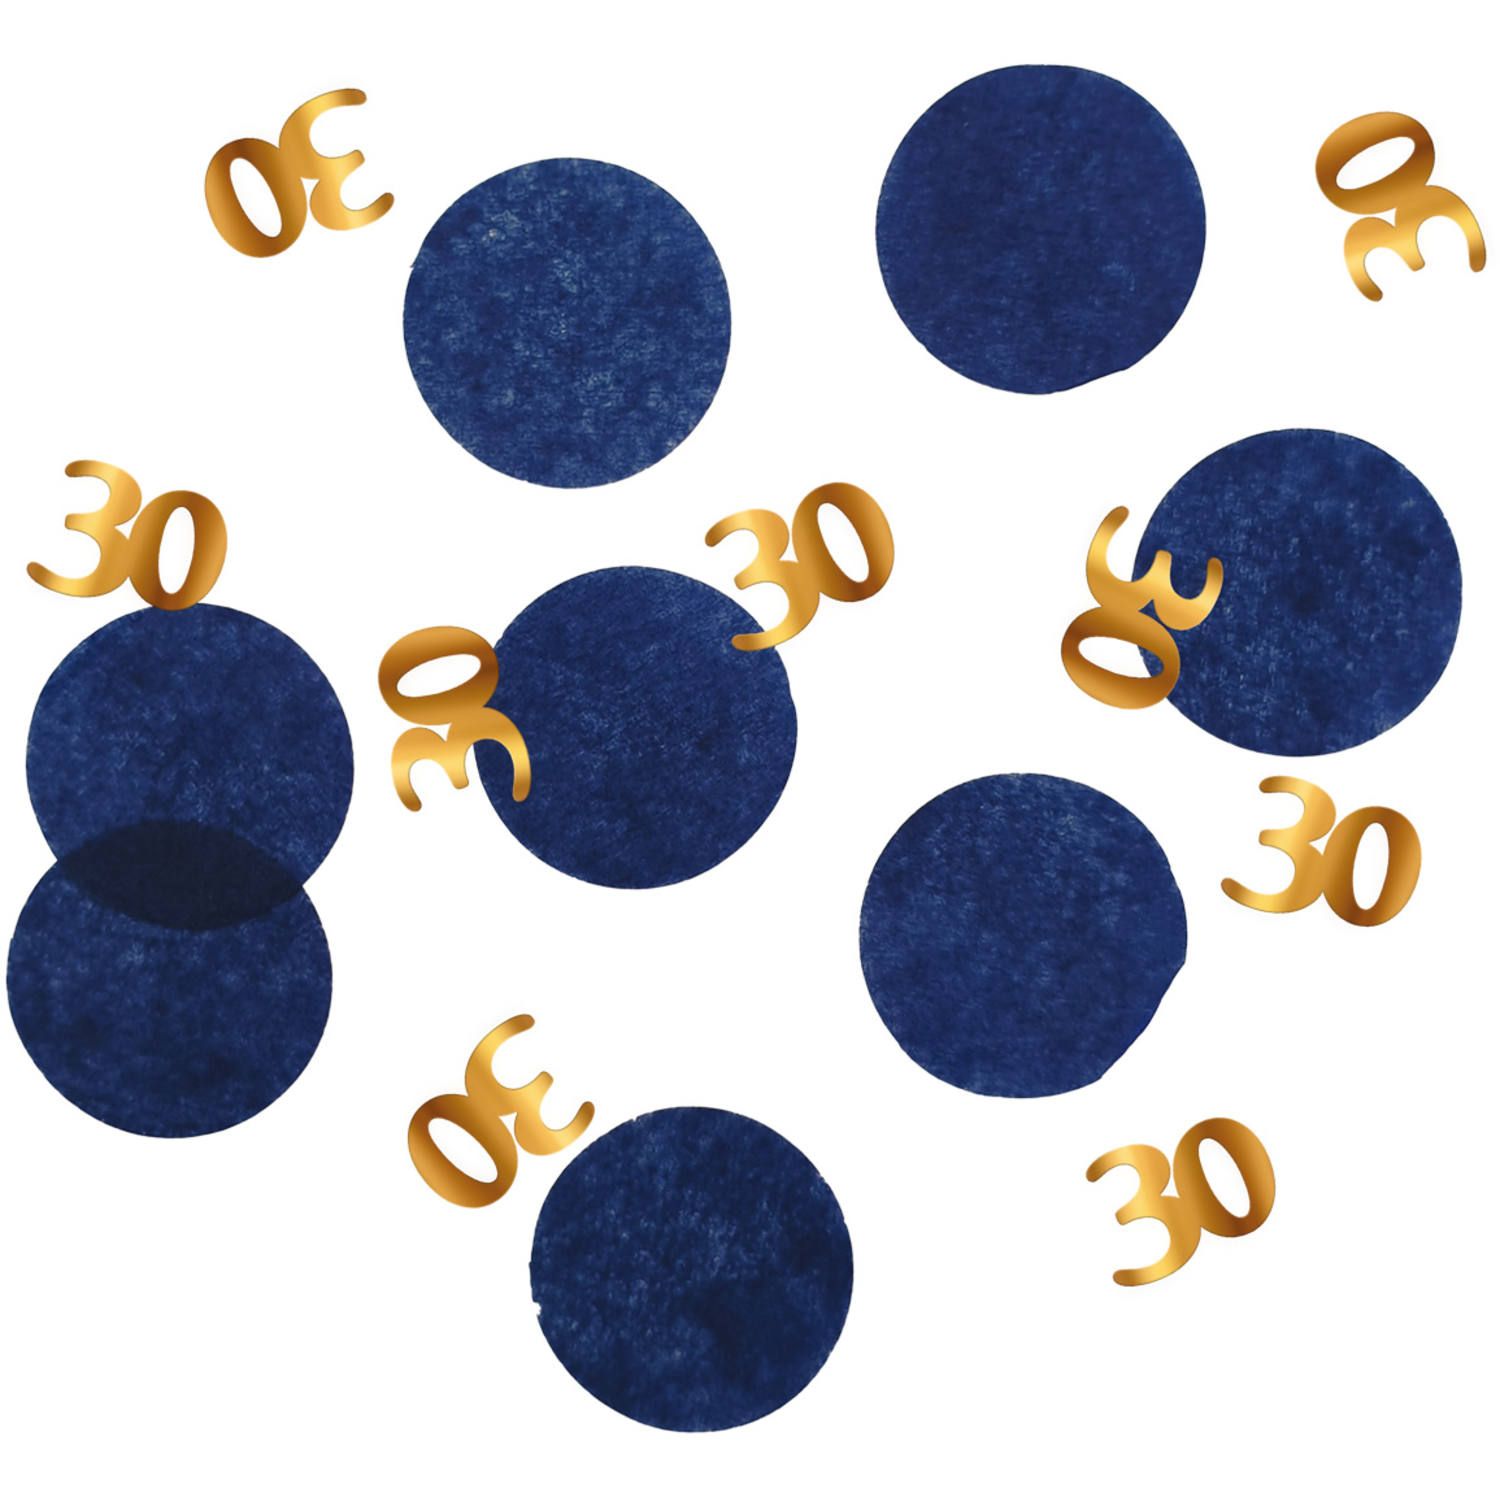 Feest confetti elegant true blue 30 jaar